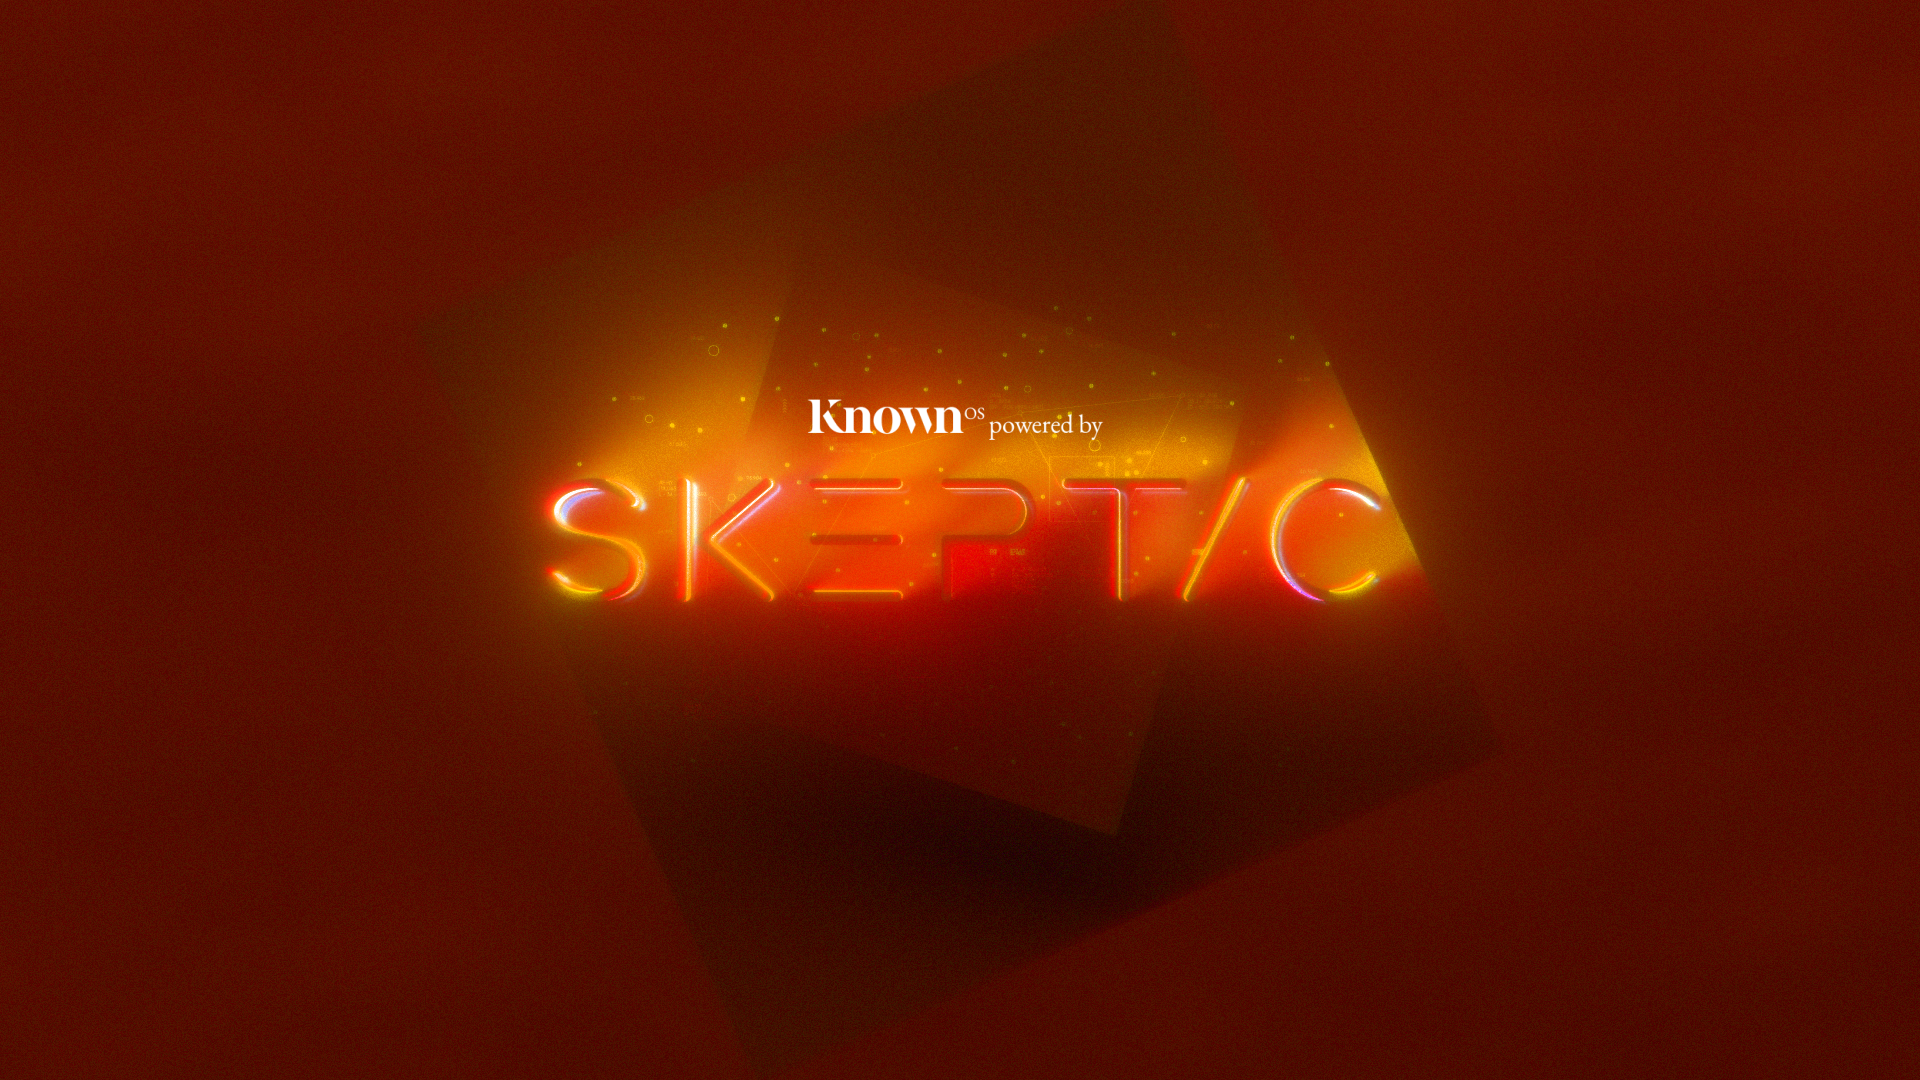 Skeptic_0103.png